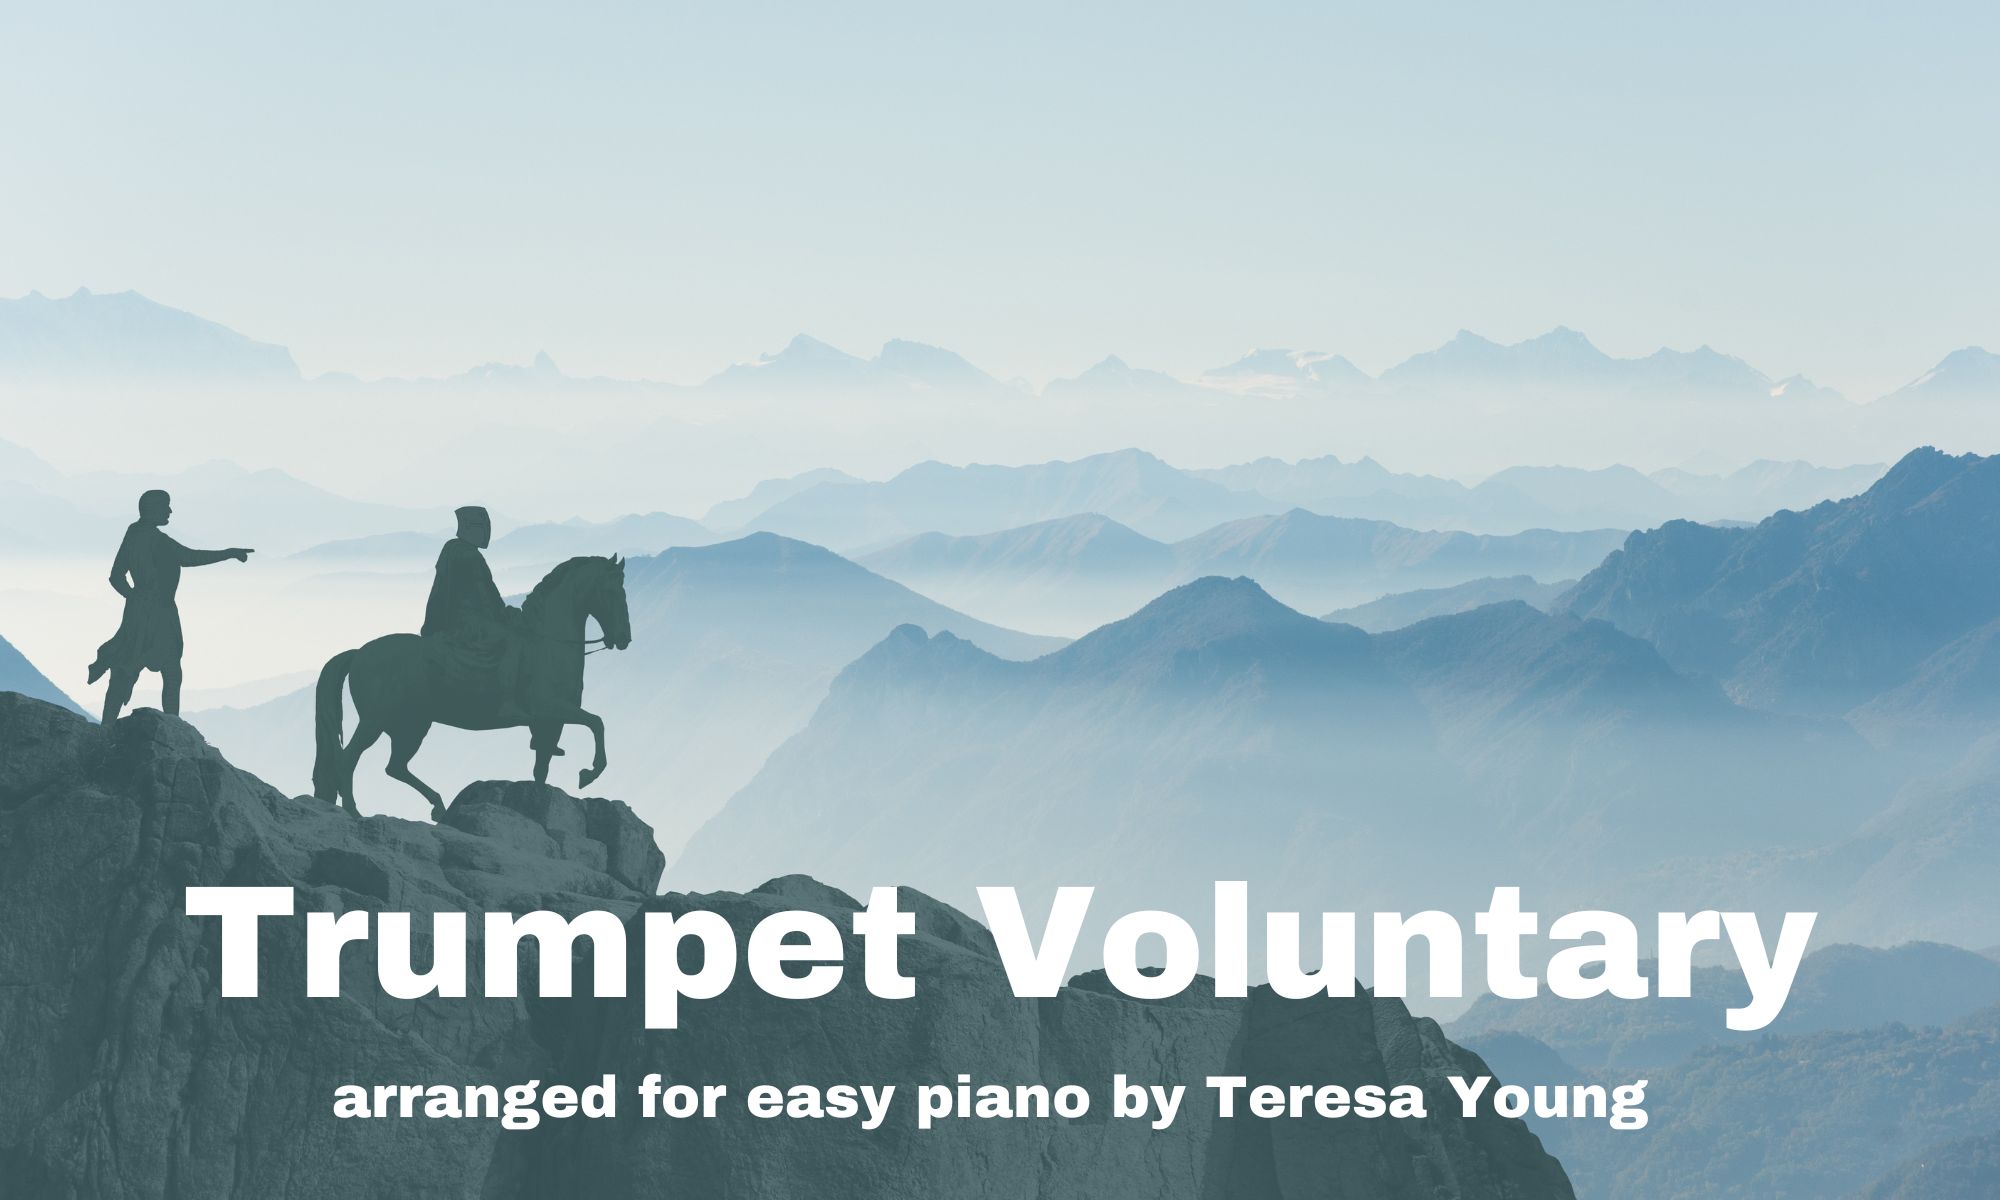 Trumpet Voluntary arr. Teresa Young